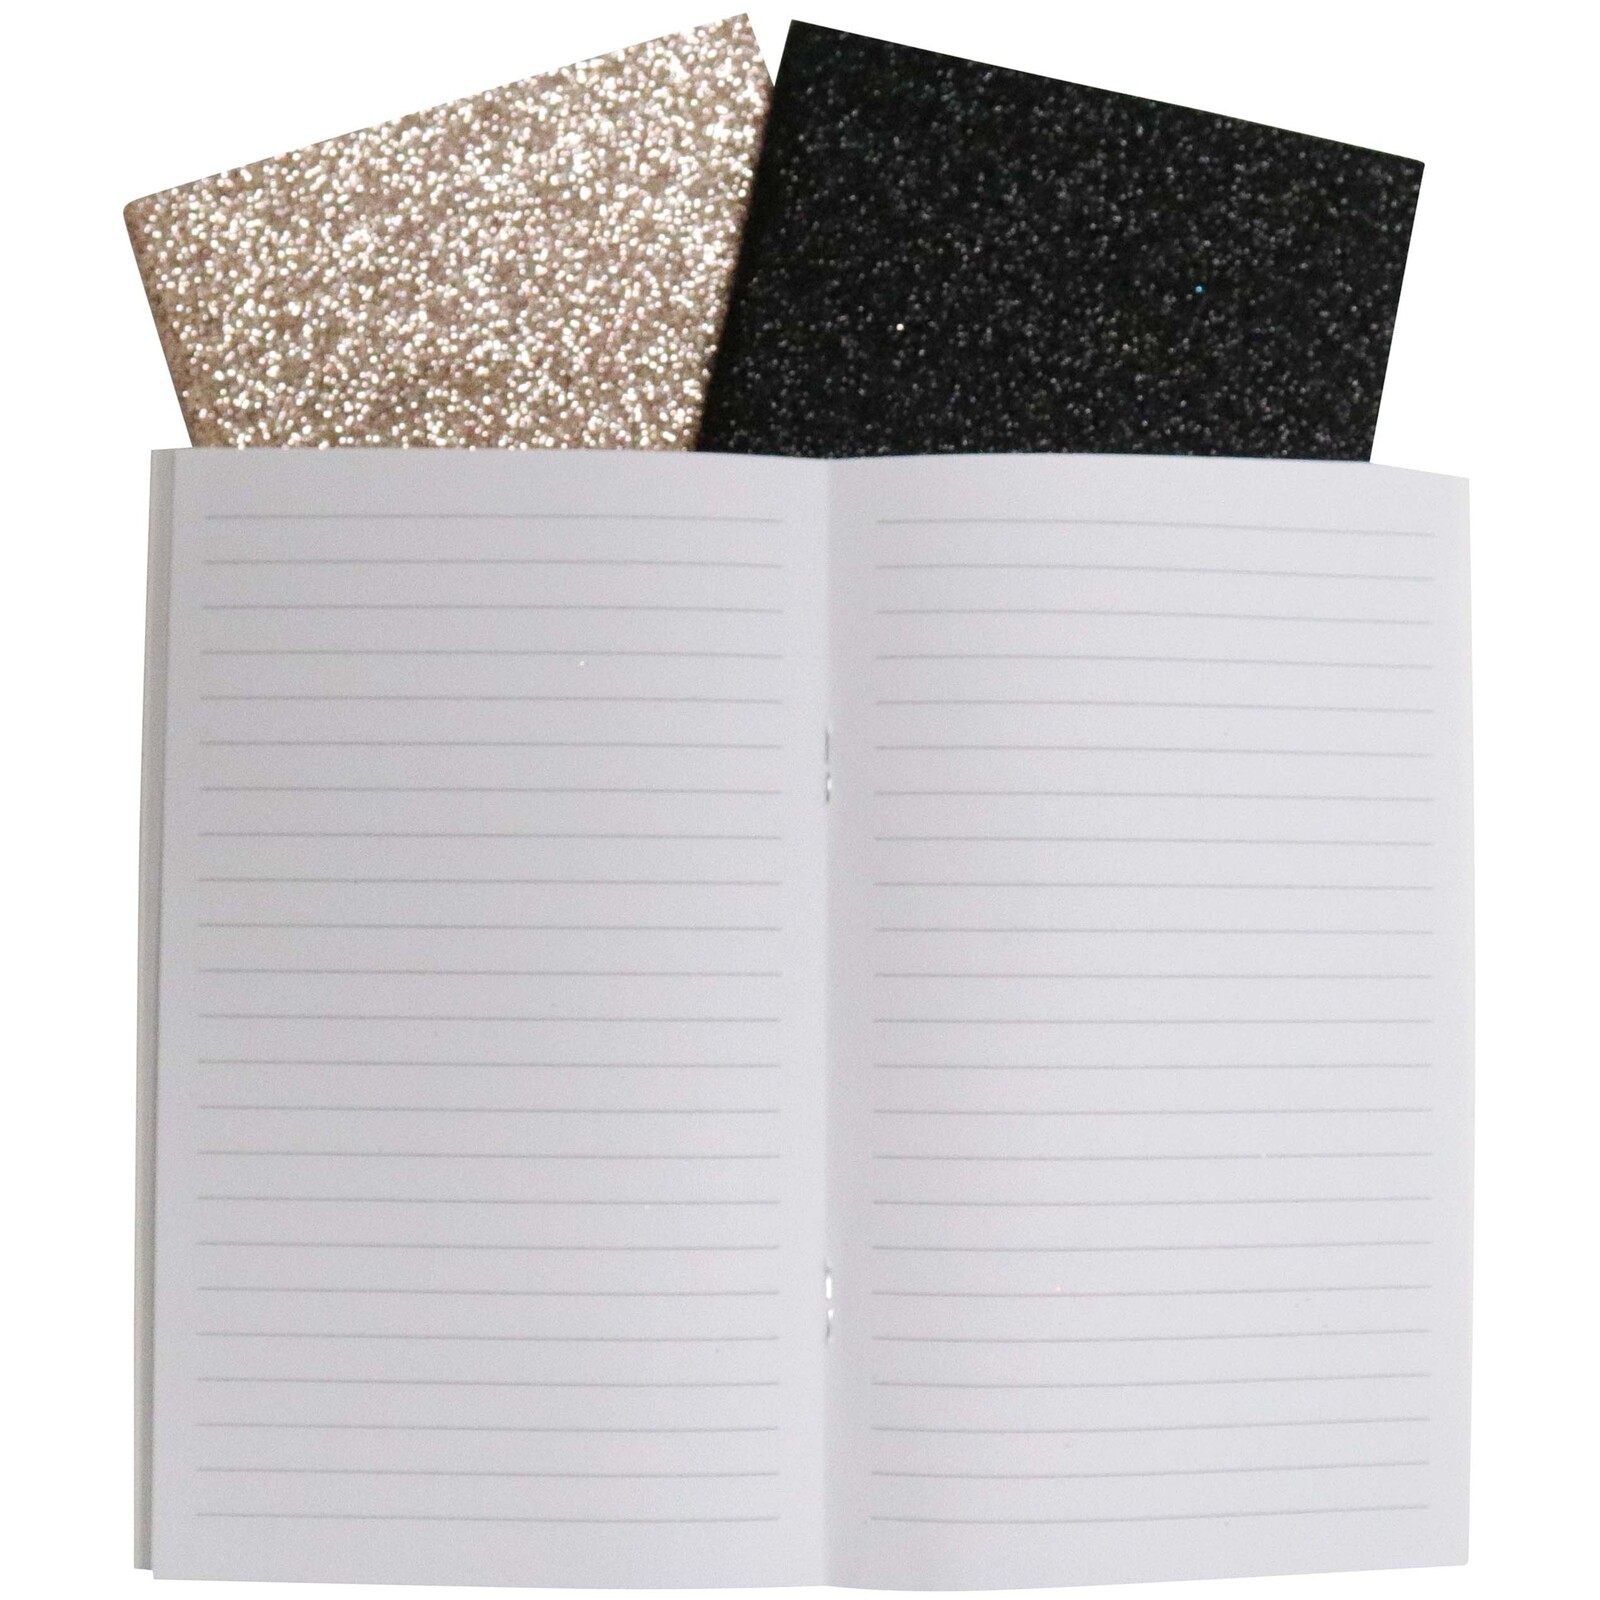 Notebooks S/3 Glitter Glam